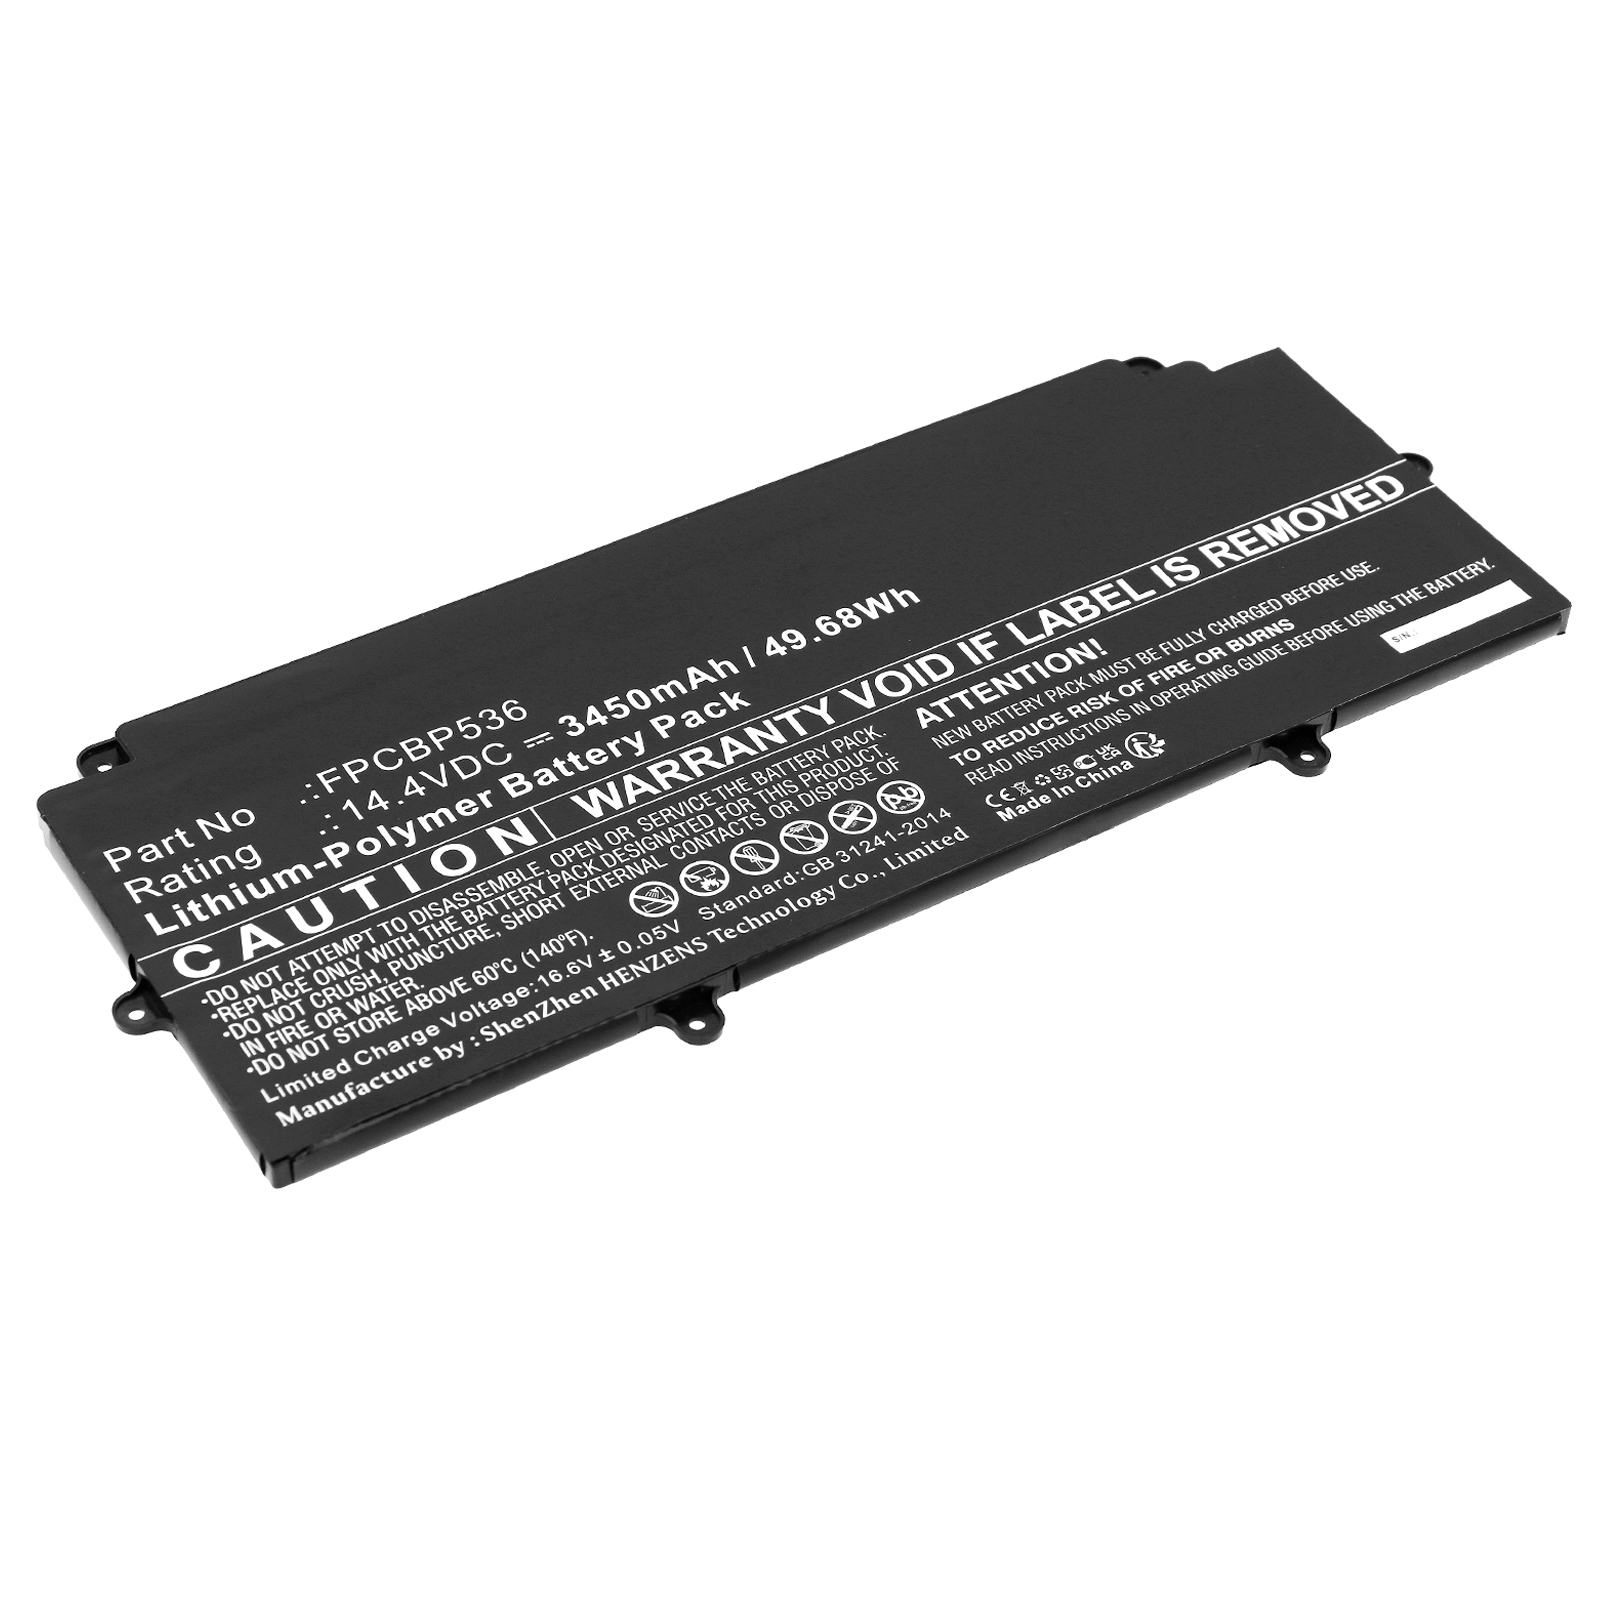 Synergy Digital Laptop Battery, Compatible with Fujitsu CP730401-01 Laptop Battery (Li-Pol, 14.4V, 3450mAh)